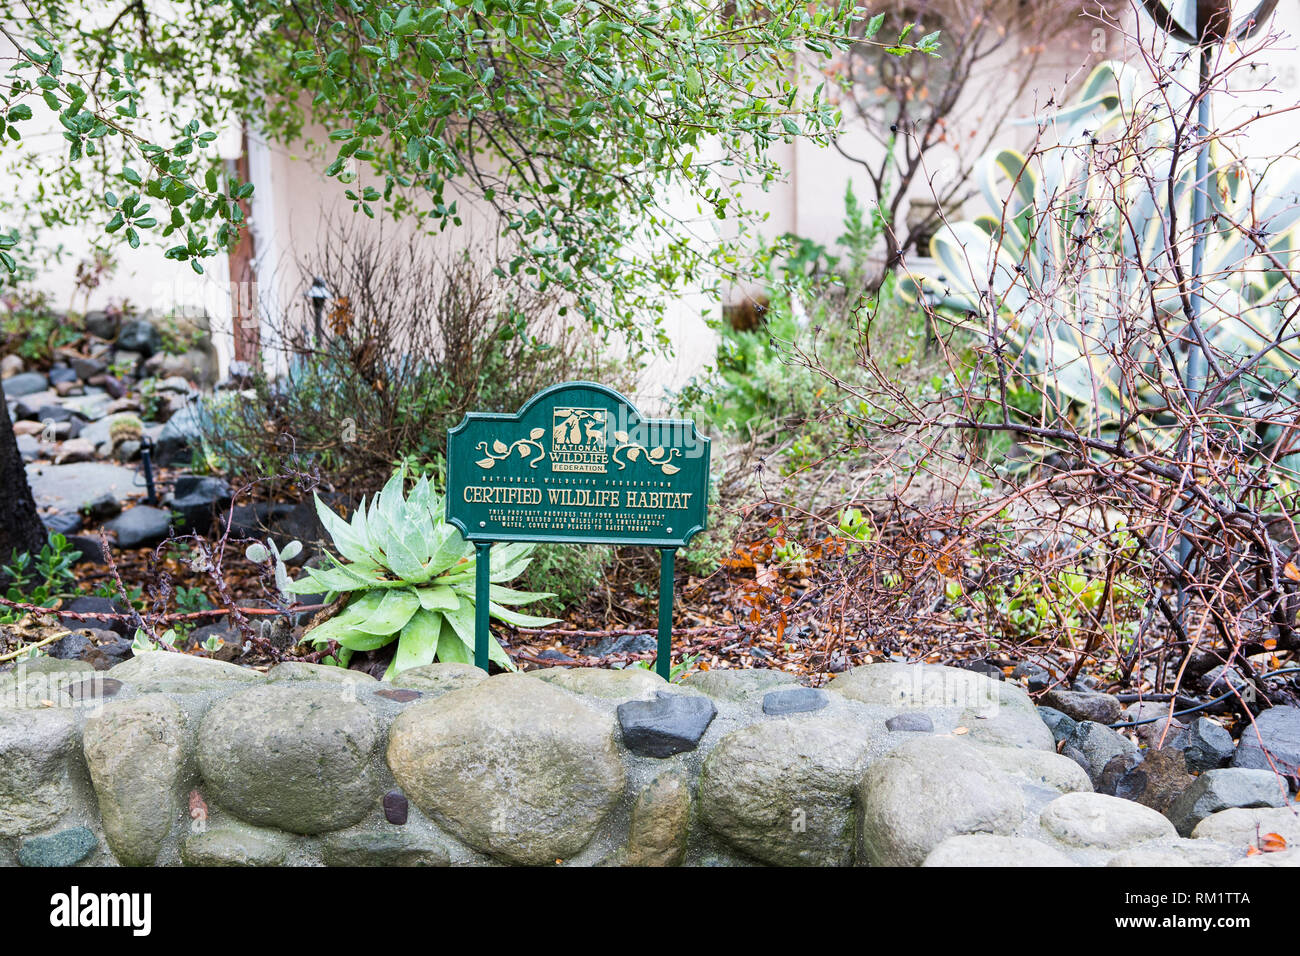 National Wildlife Federation certified wildlife habitat sign in Modjeska Canyon, Orange County, California USA Stock Photo